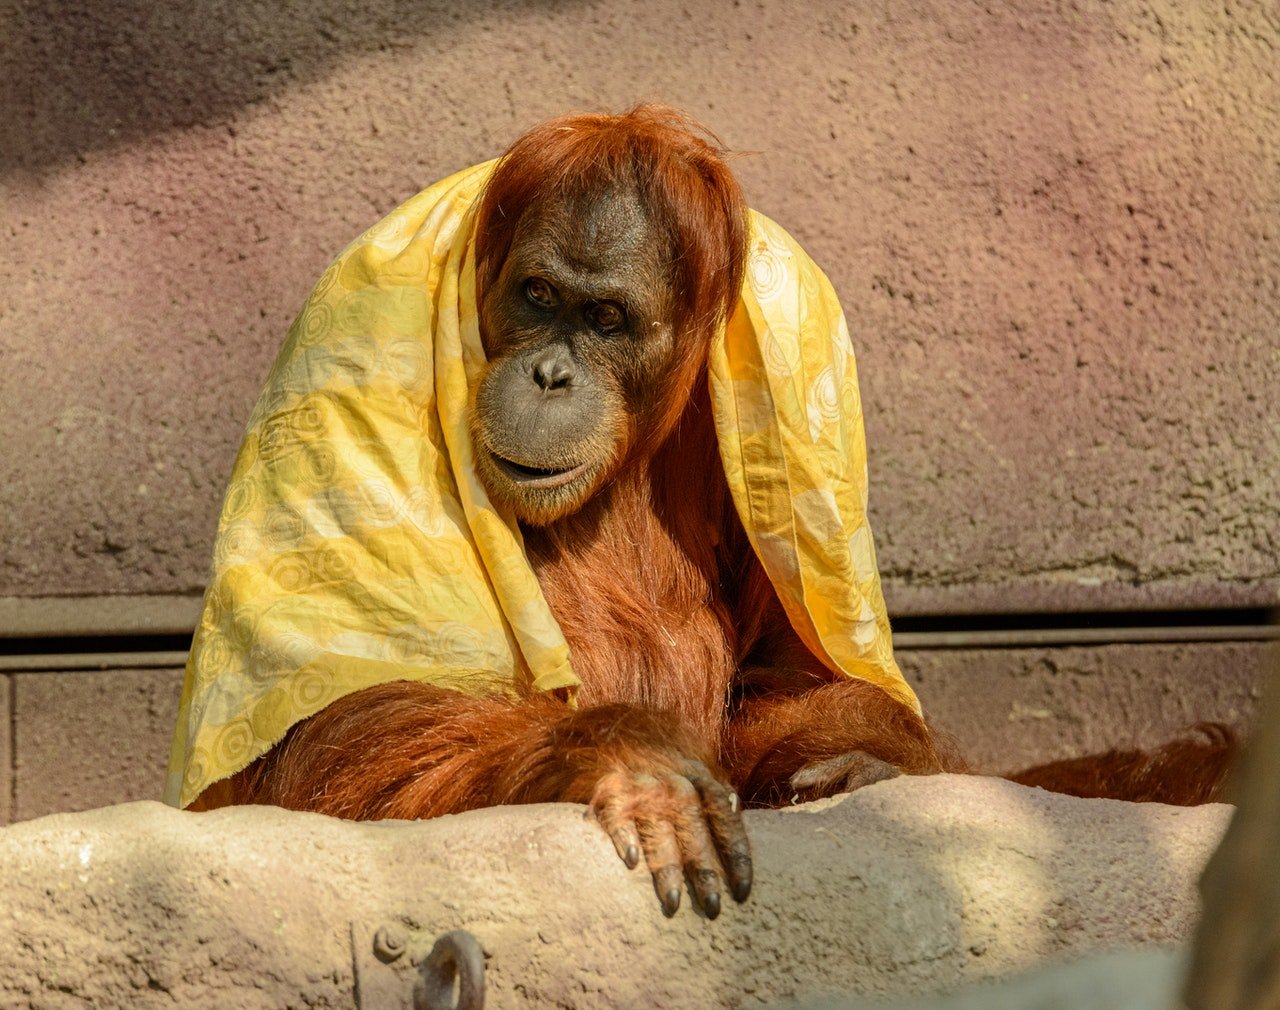 Photo of an orangutan in a zoo | Photo: Pexels